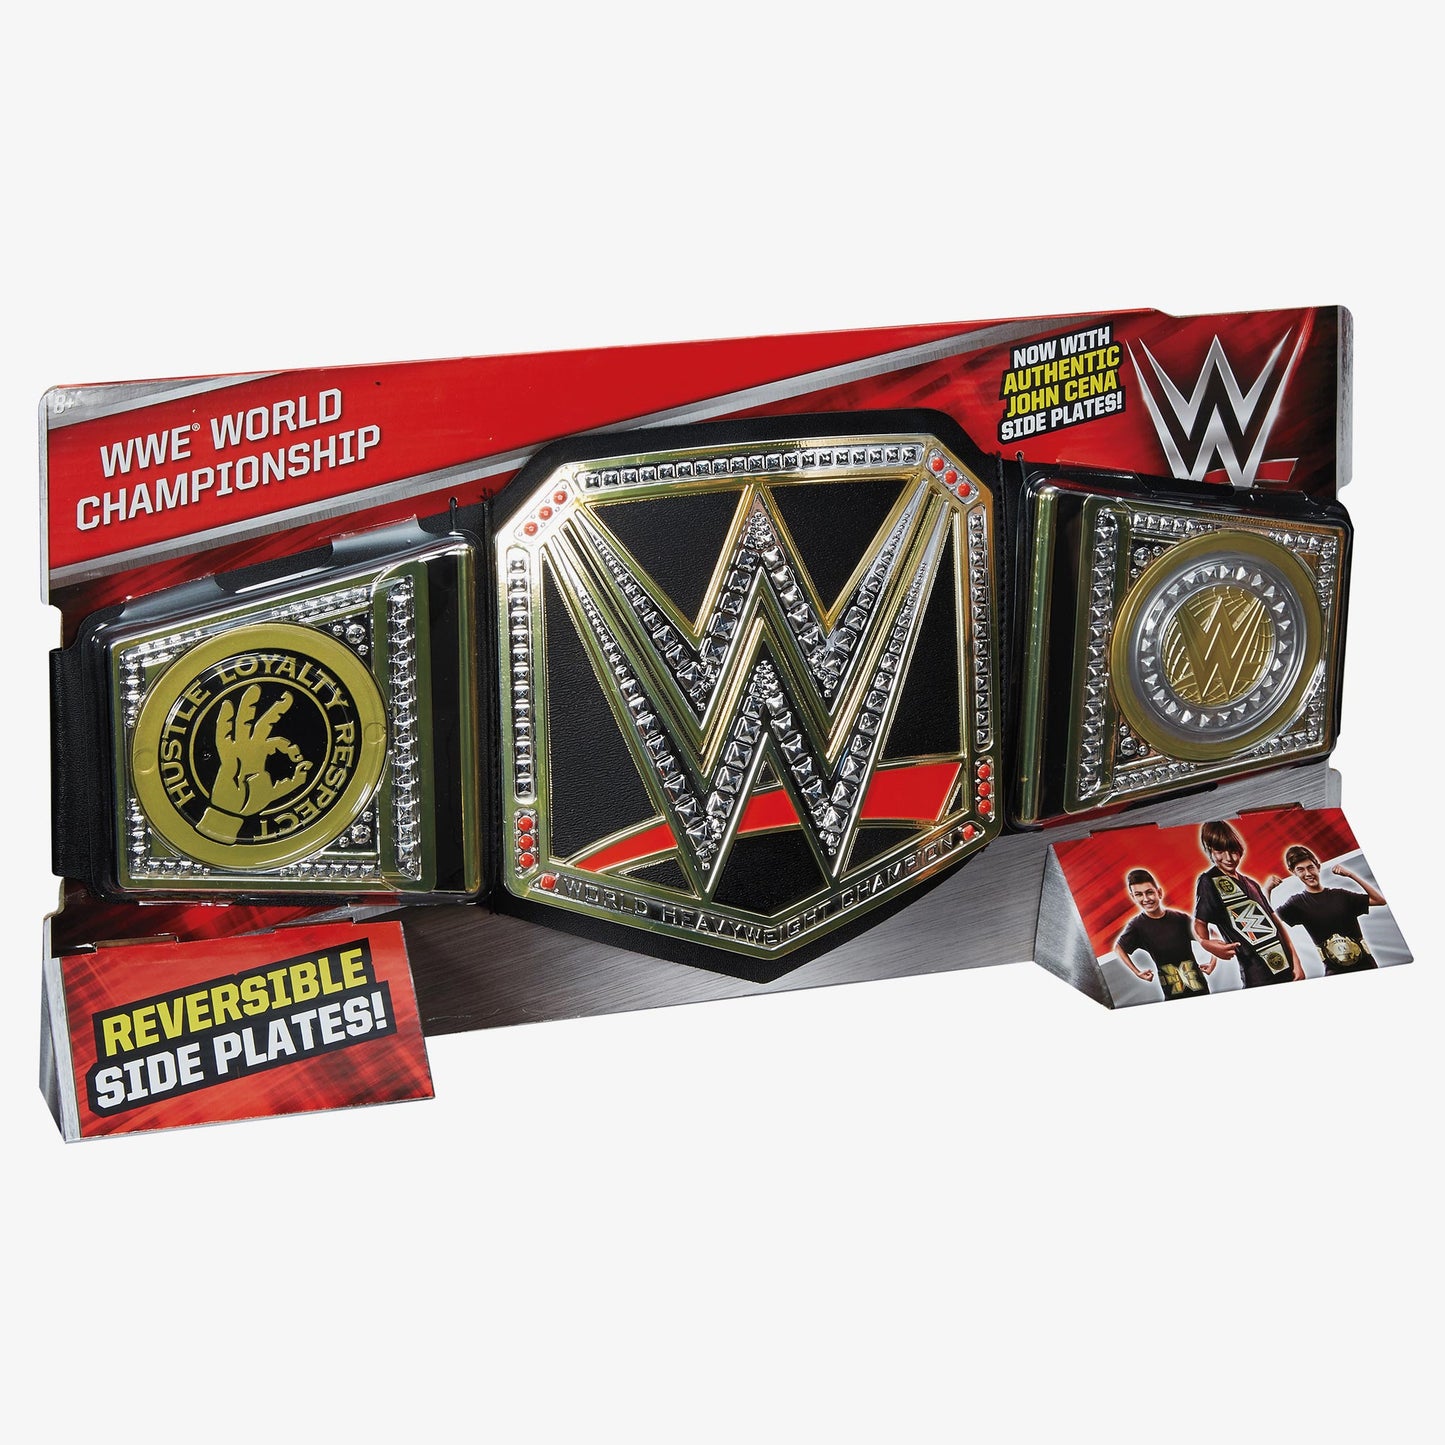 WWE World Championship (With John Cena Sideplates)